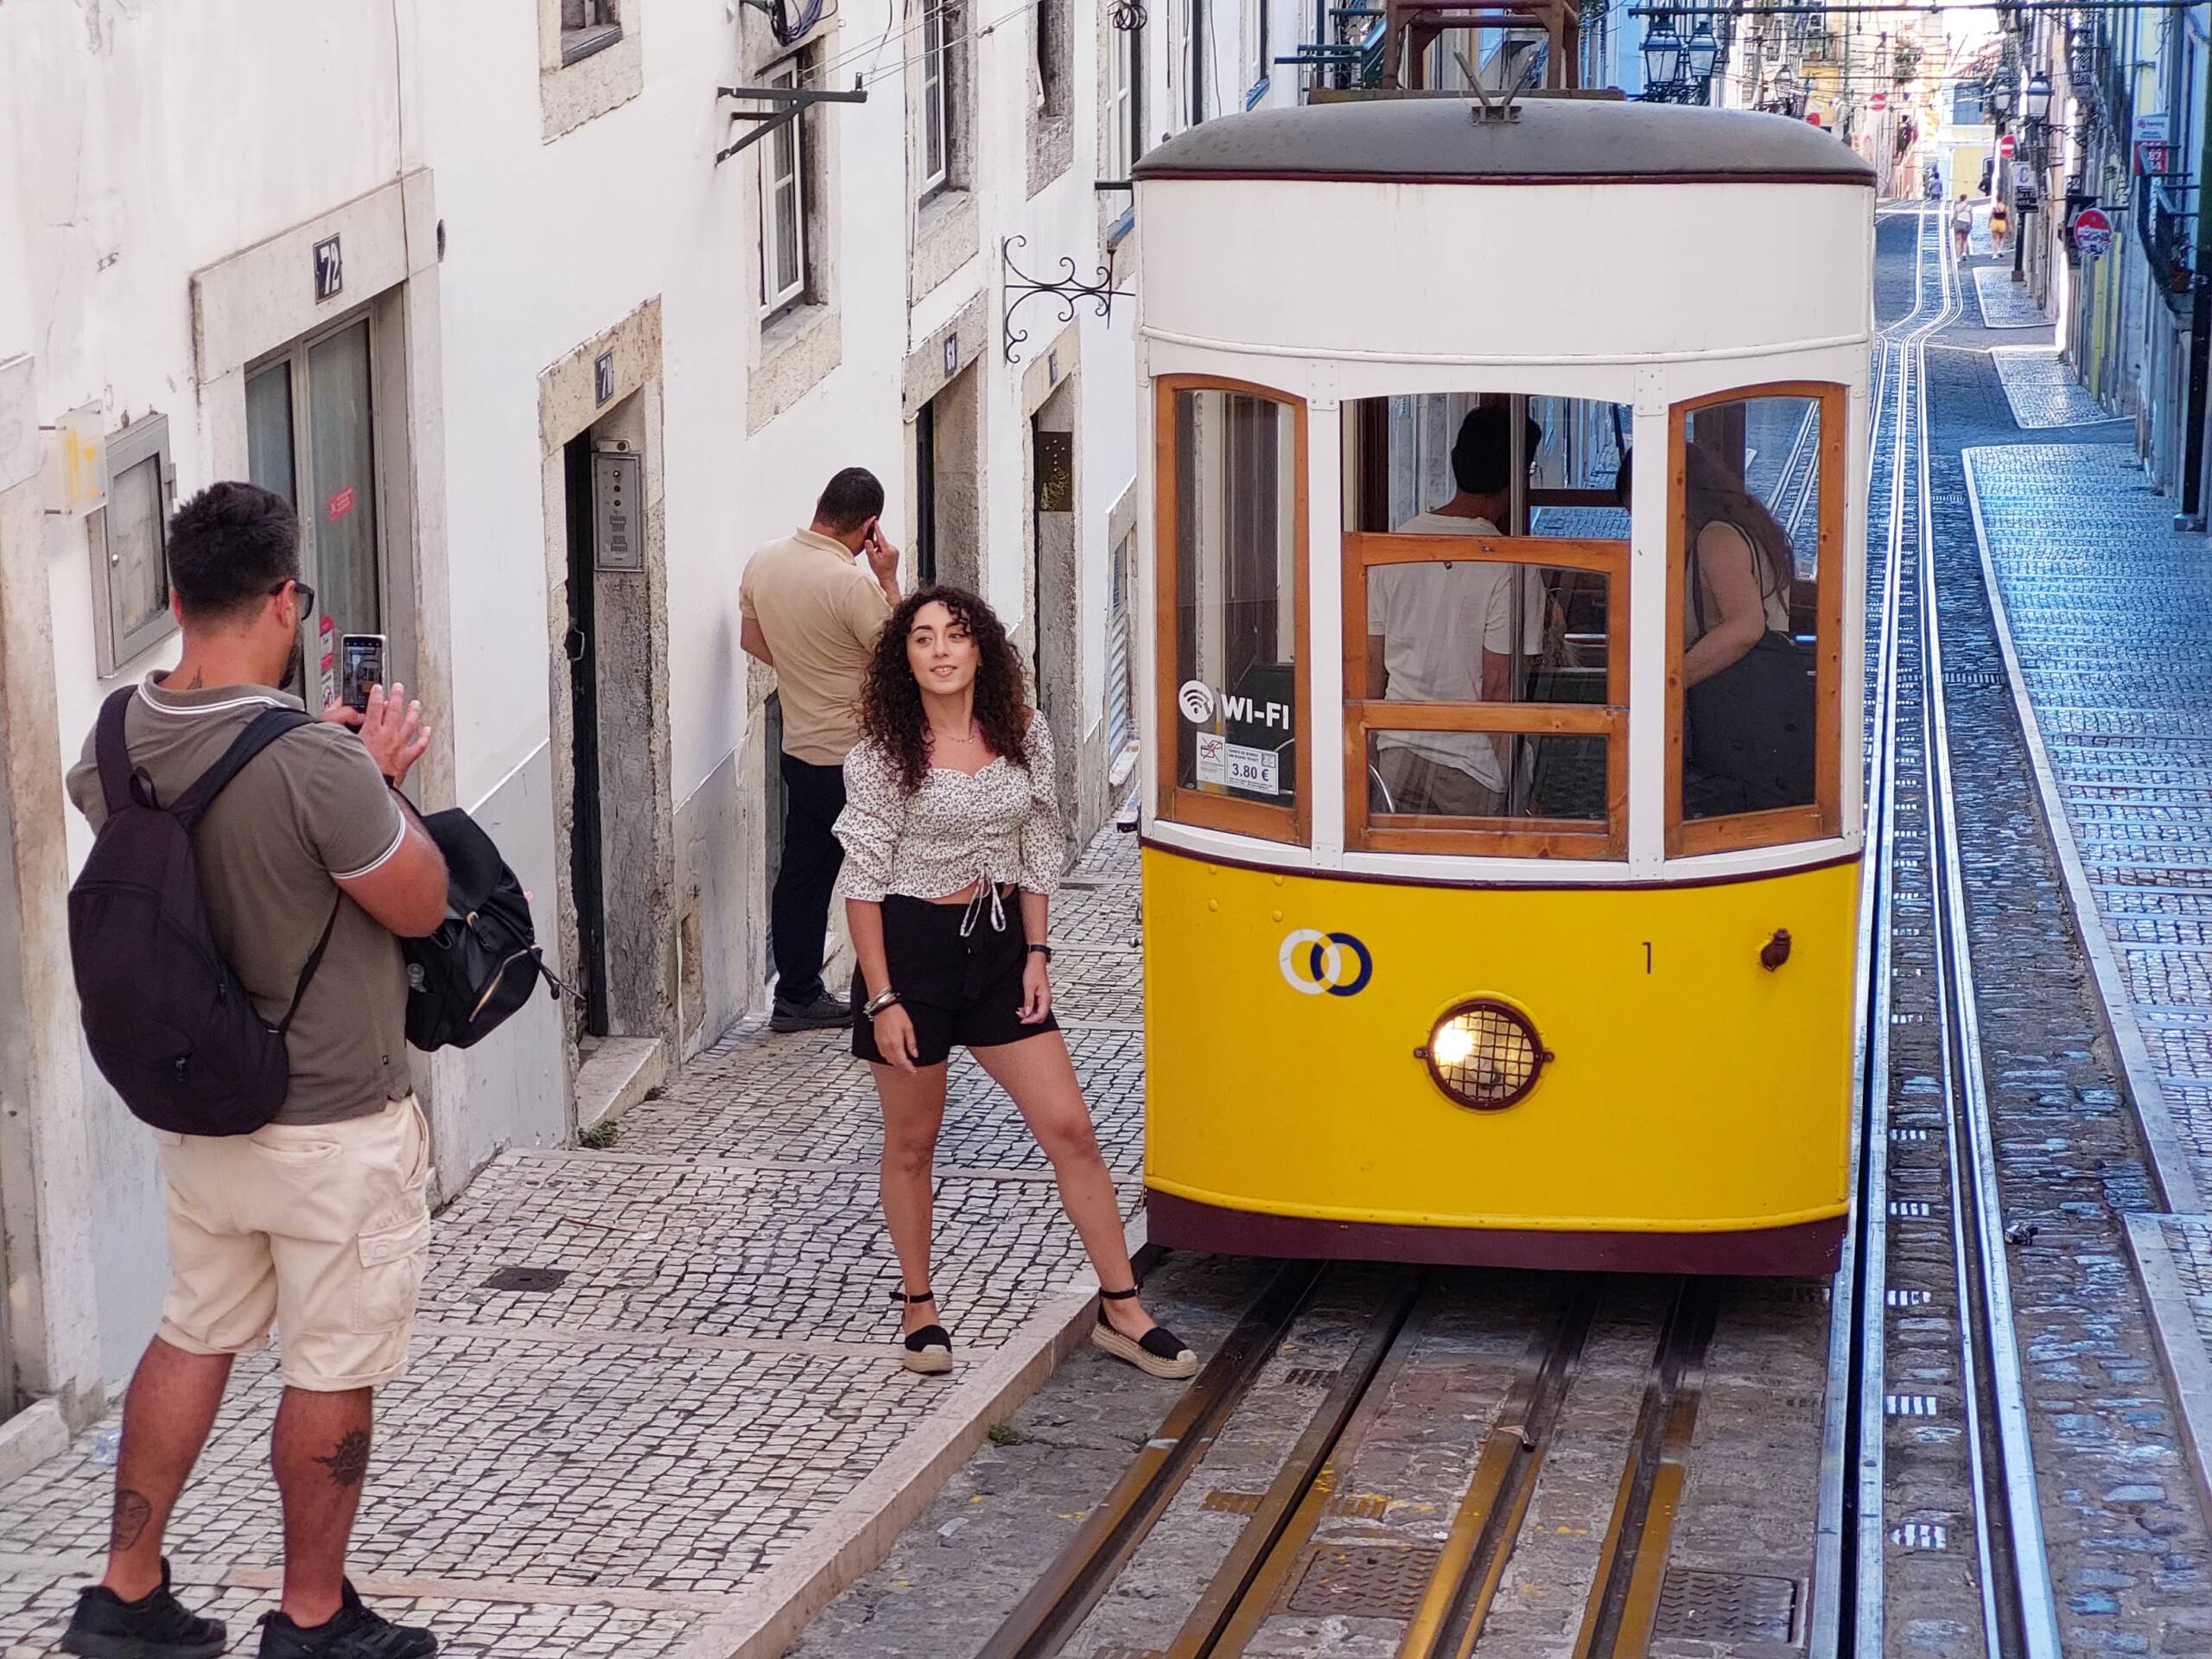 Lisbon: The Charm of Romance